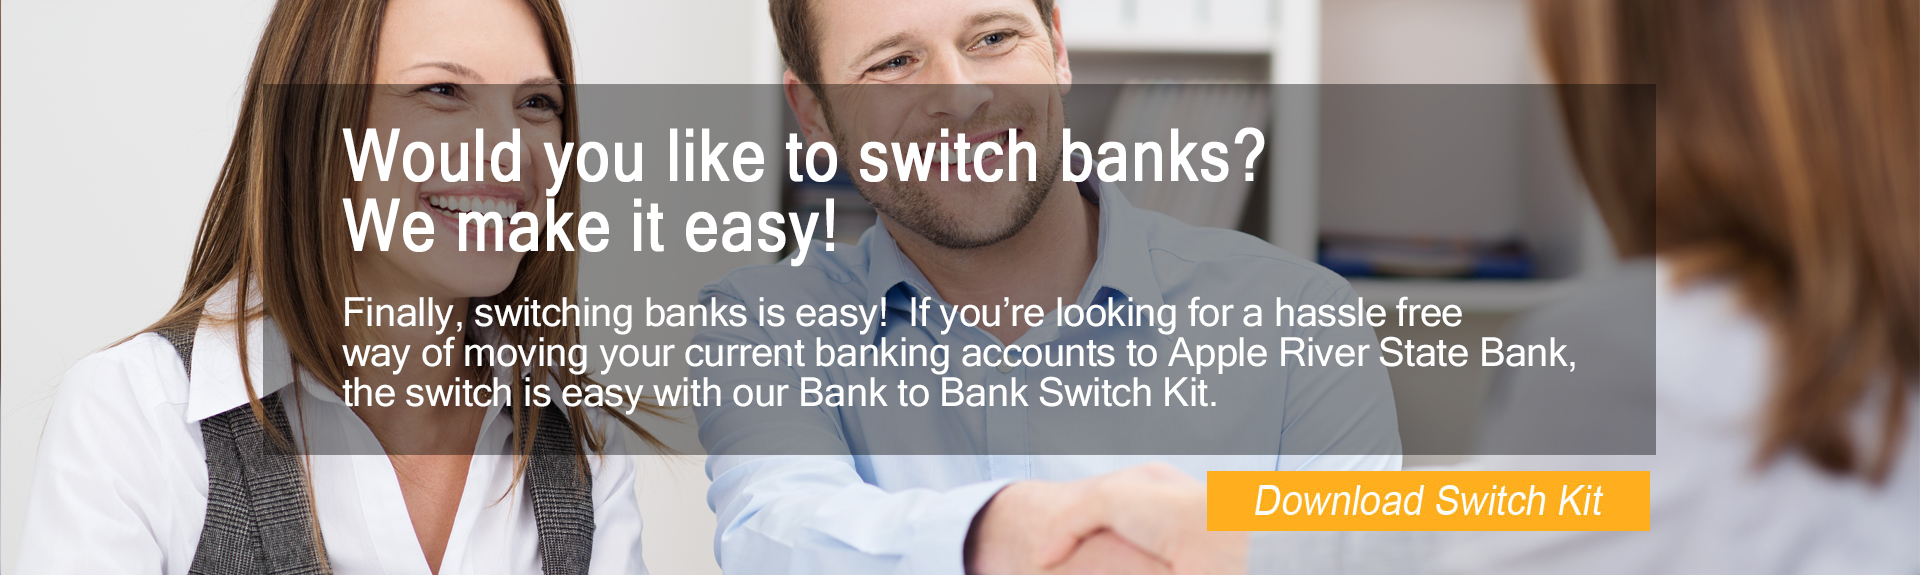 Bank to bank switch kit